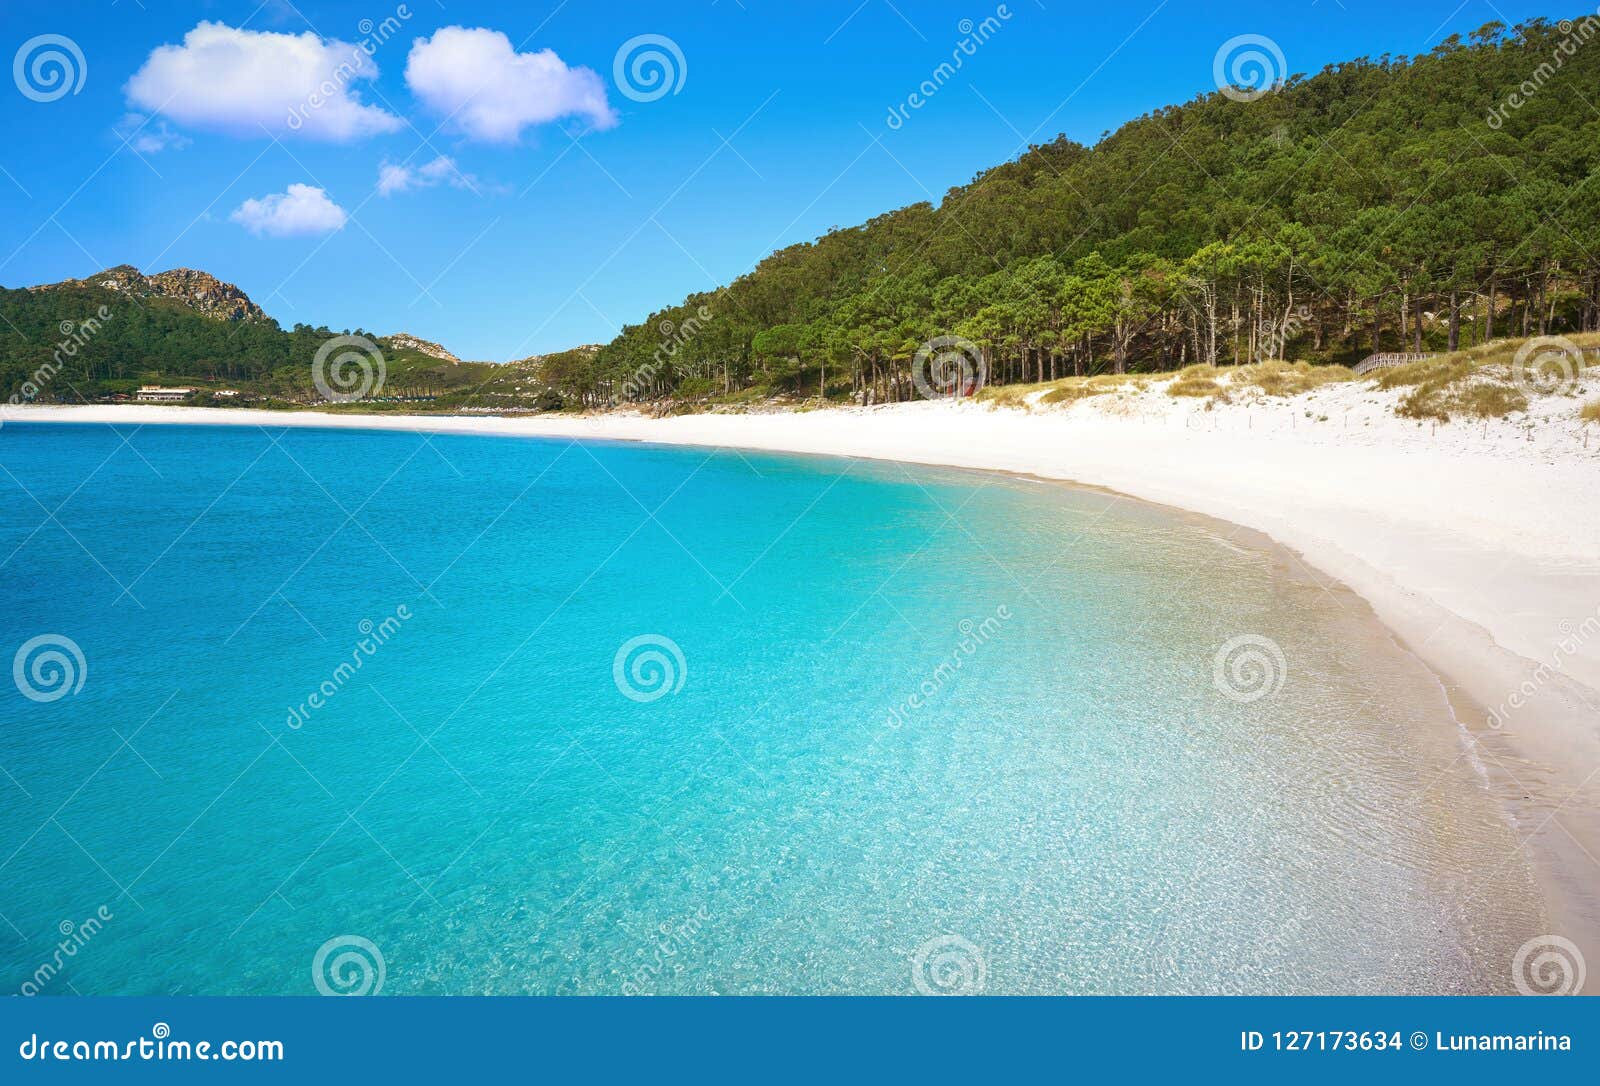 islas cies islands beach turquoise near vigo galicia